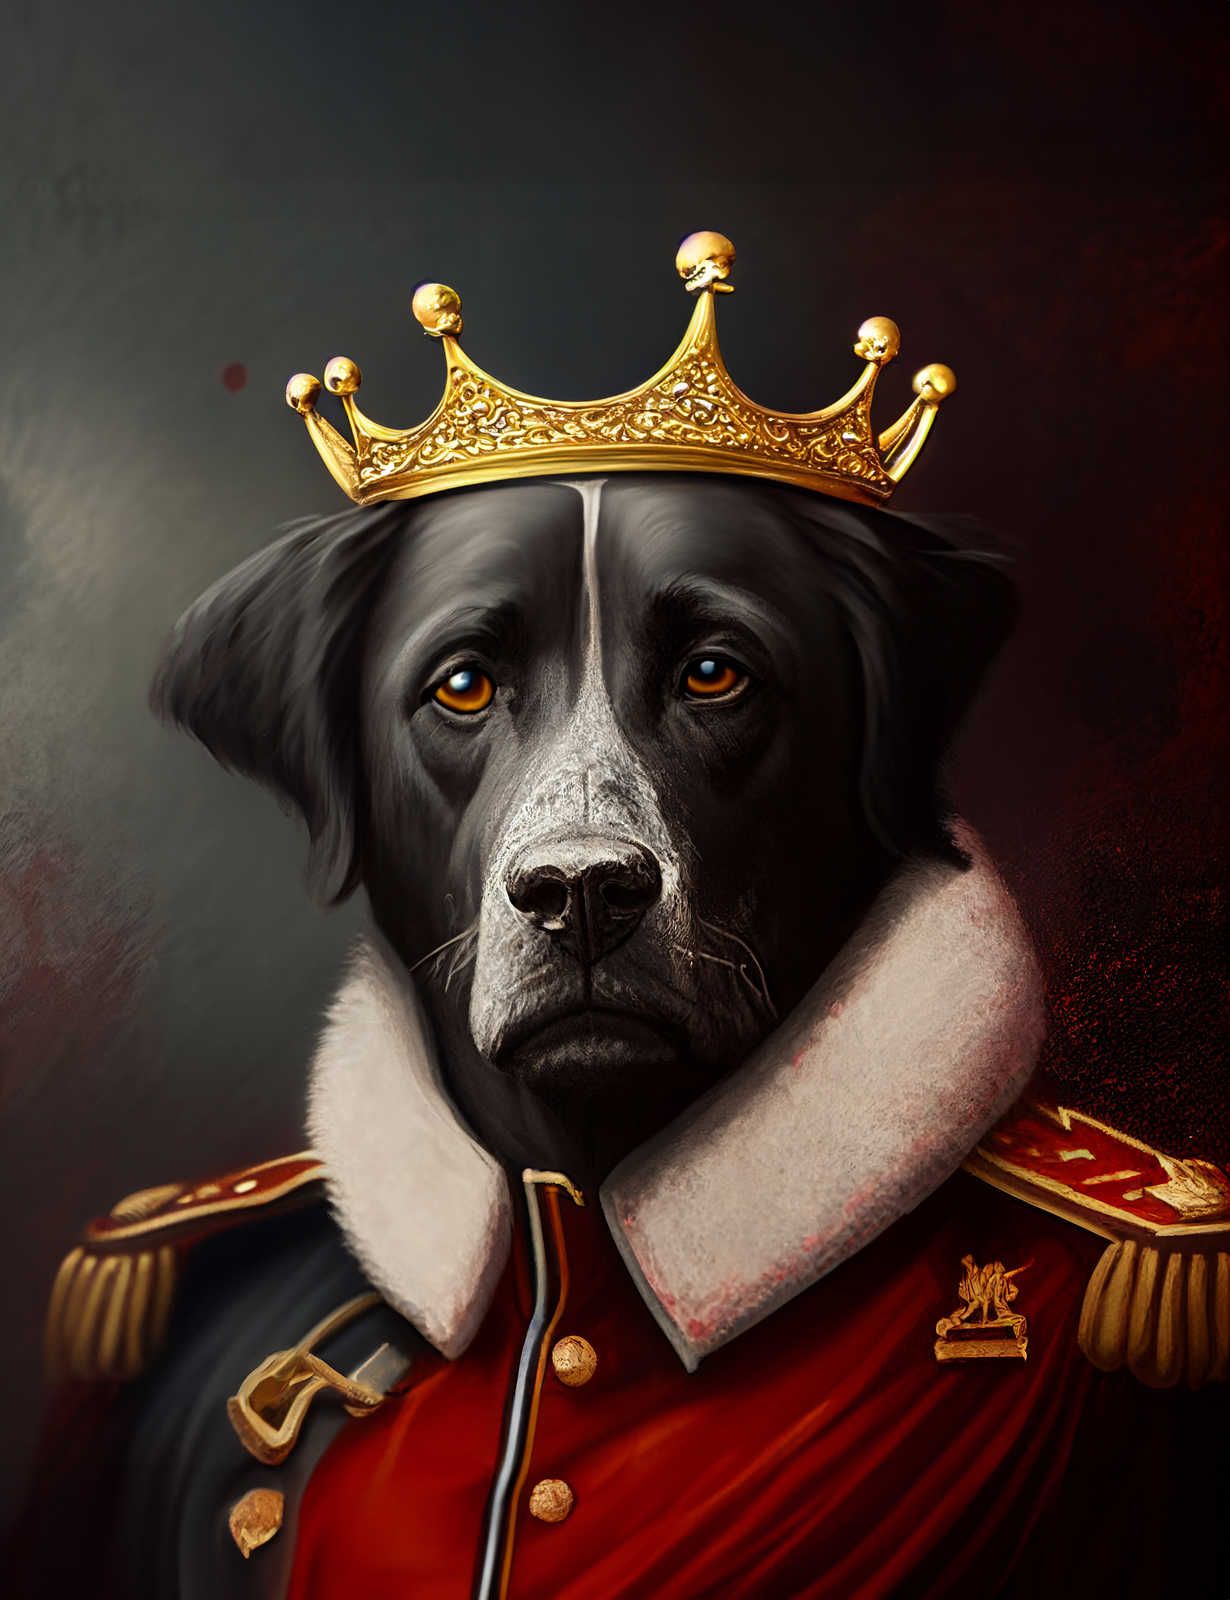             KI Canvas schilderij »Royal Dog« - 80 cm x 120 cm
        